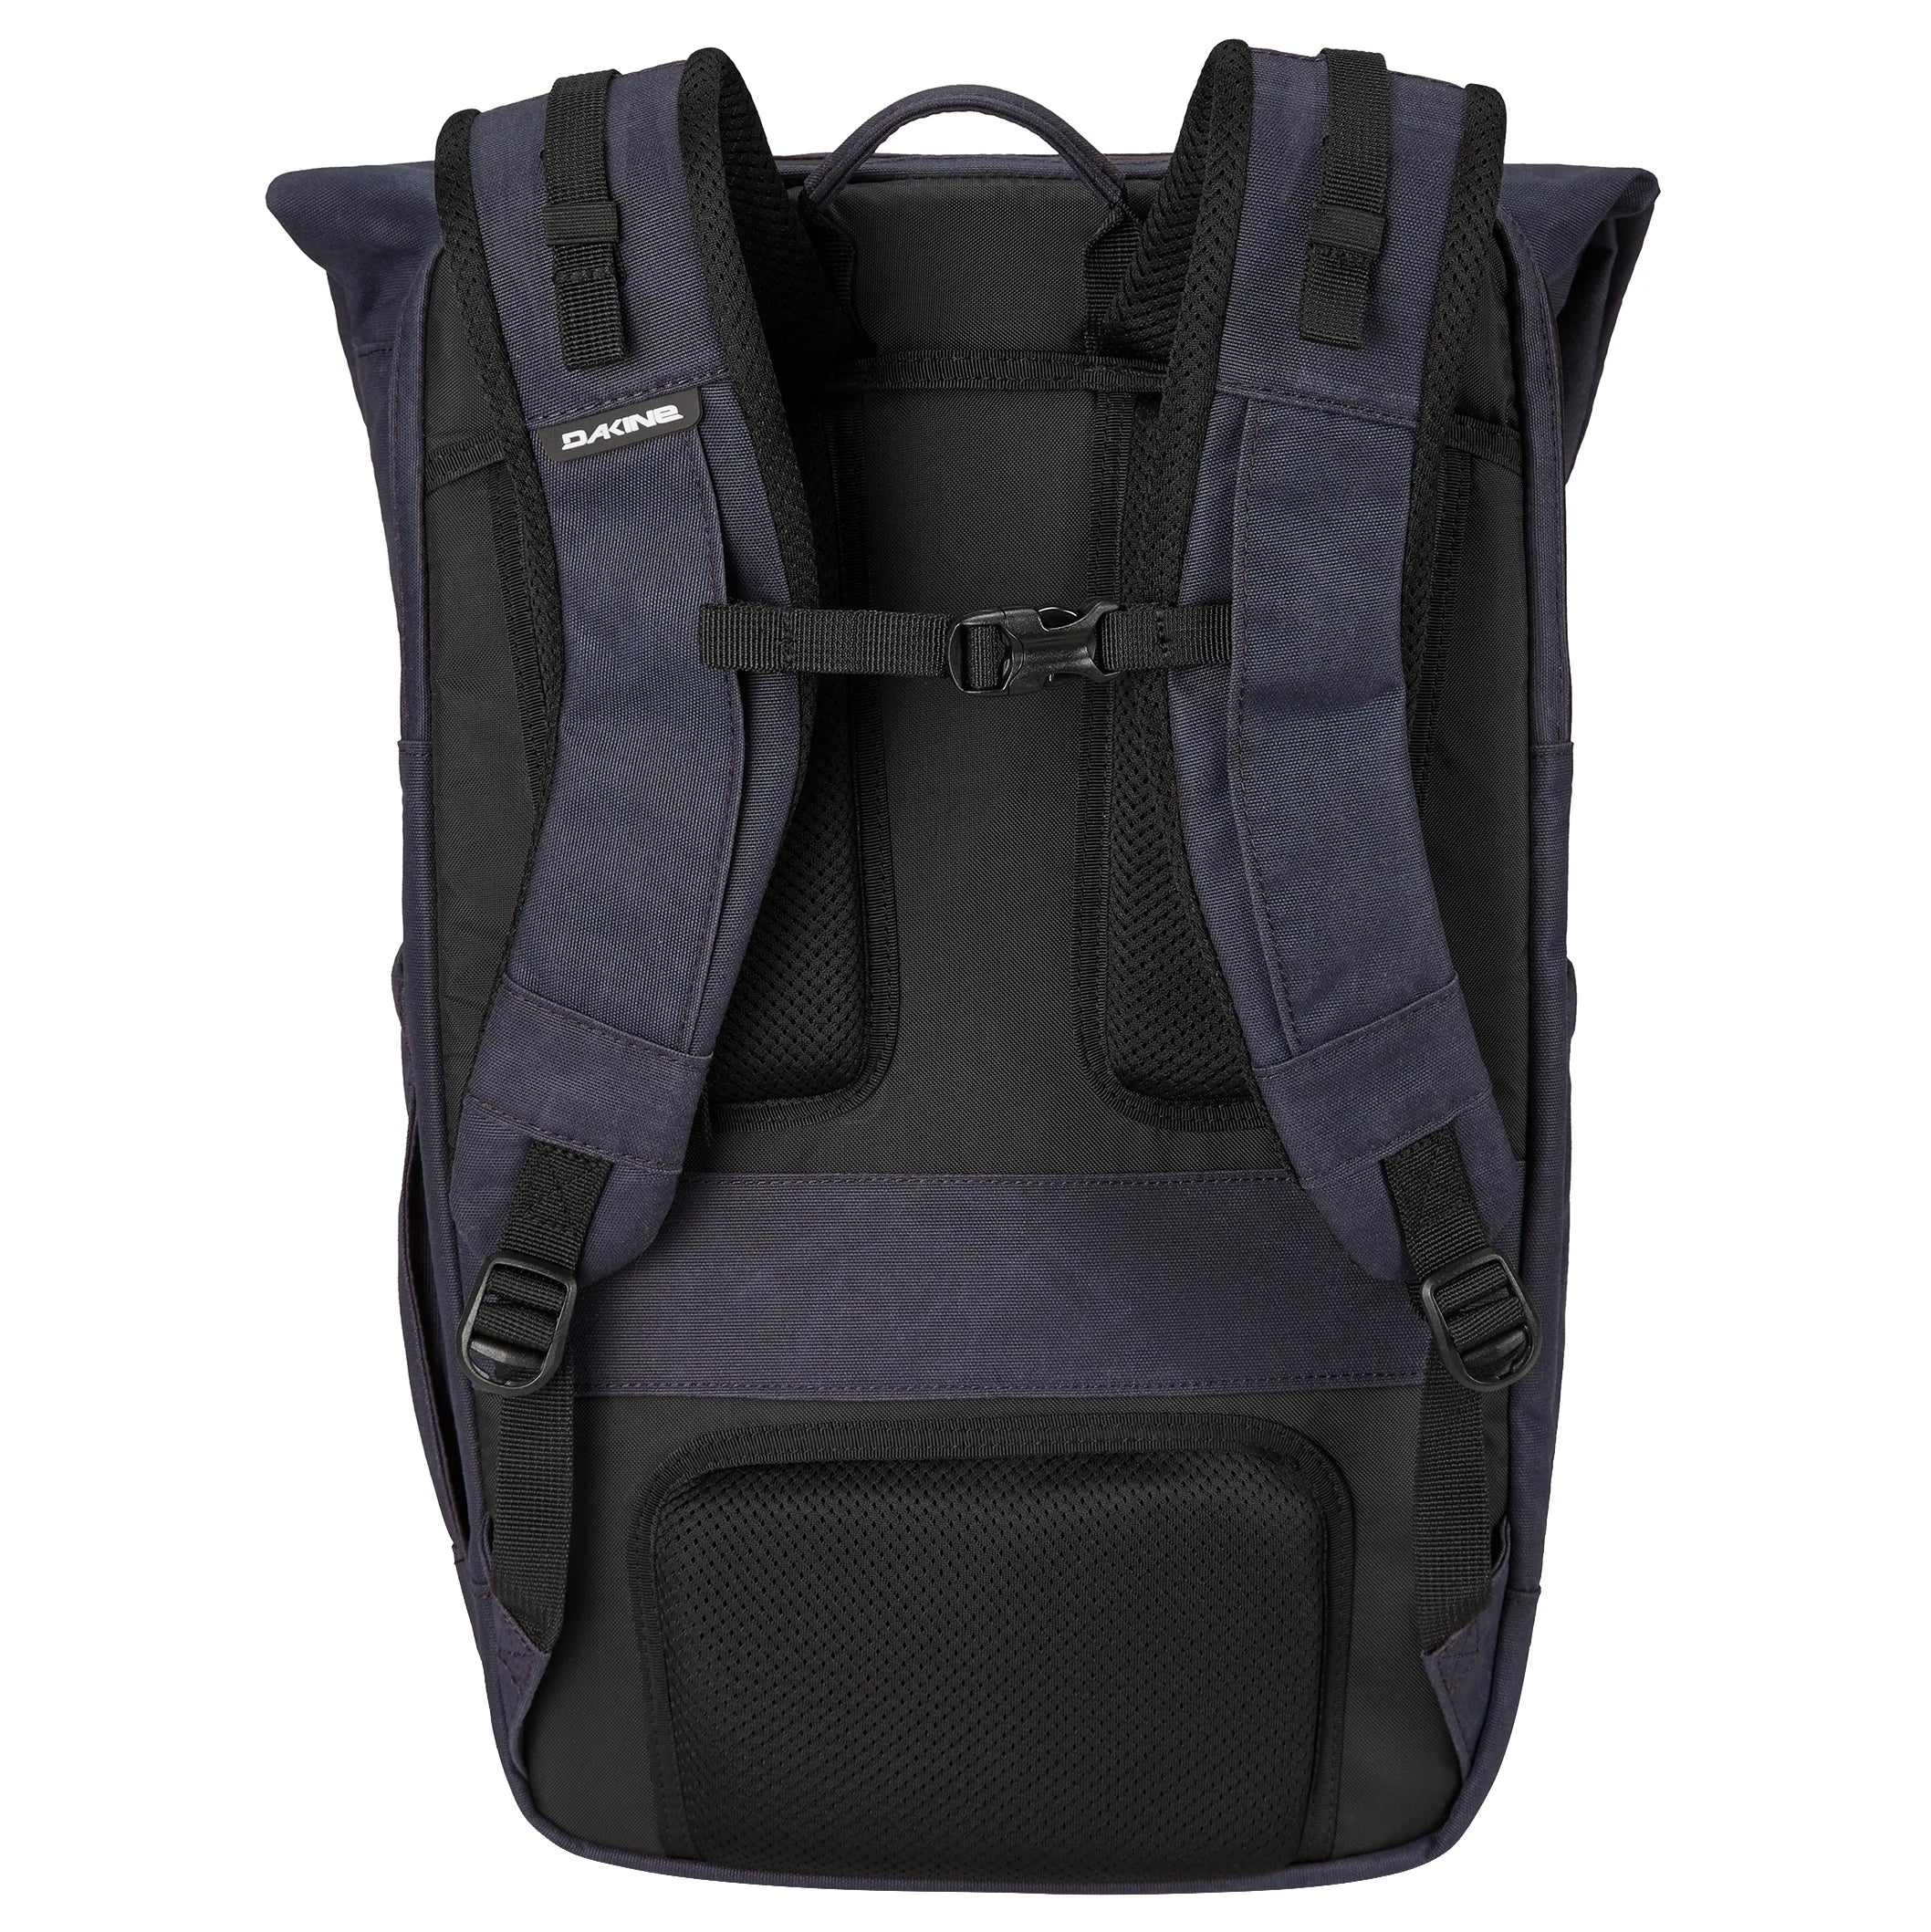 Dakine Packs & Bags Infinity Pack 21L Backpack 46 cm - port red